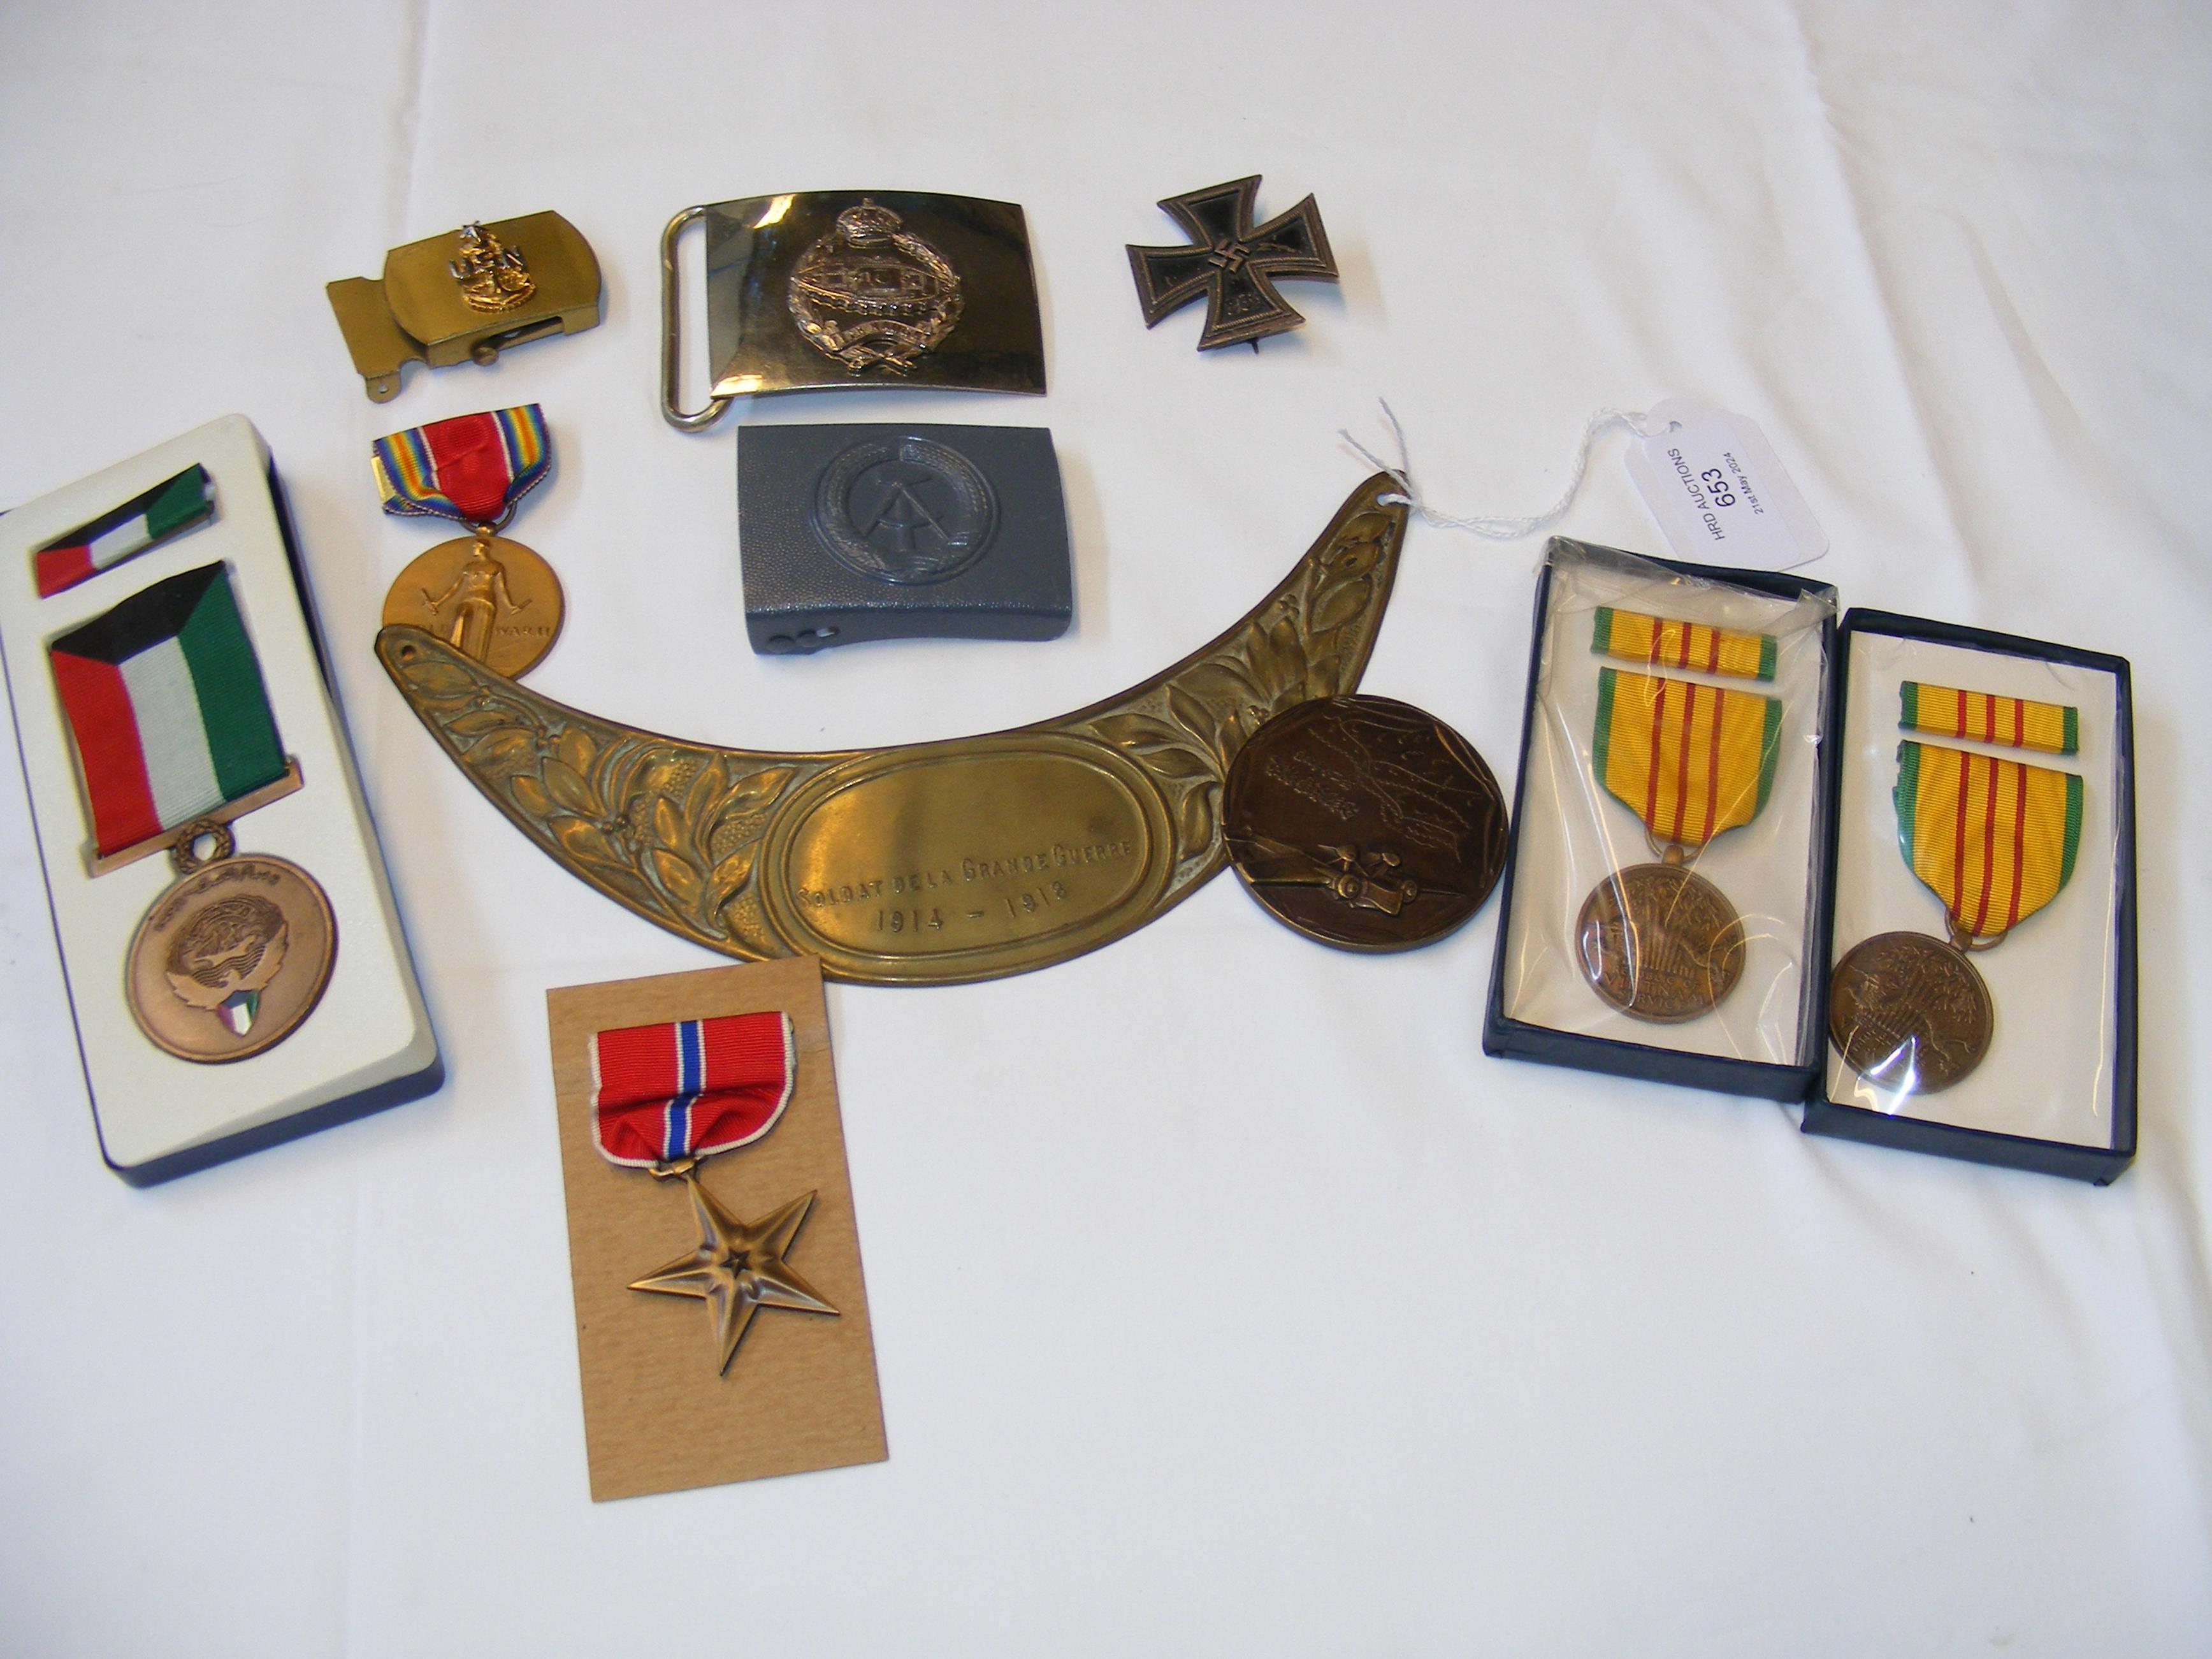 Military belt buckles, World War medal